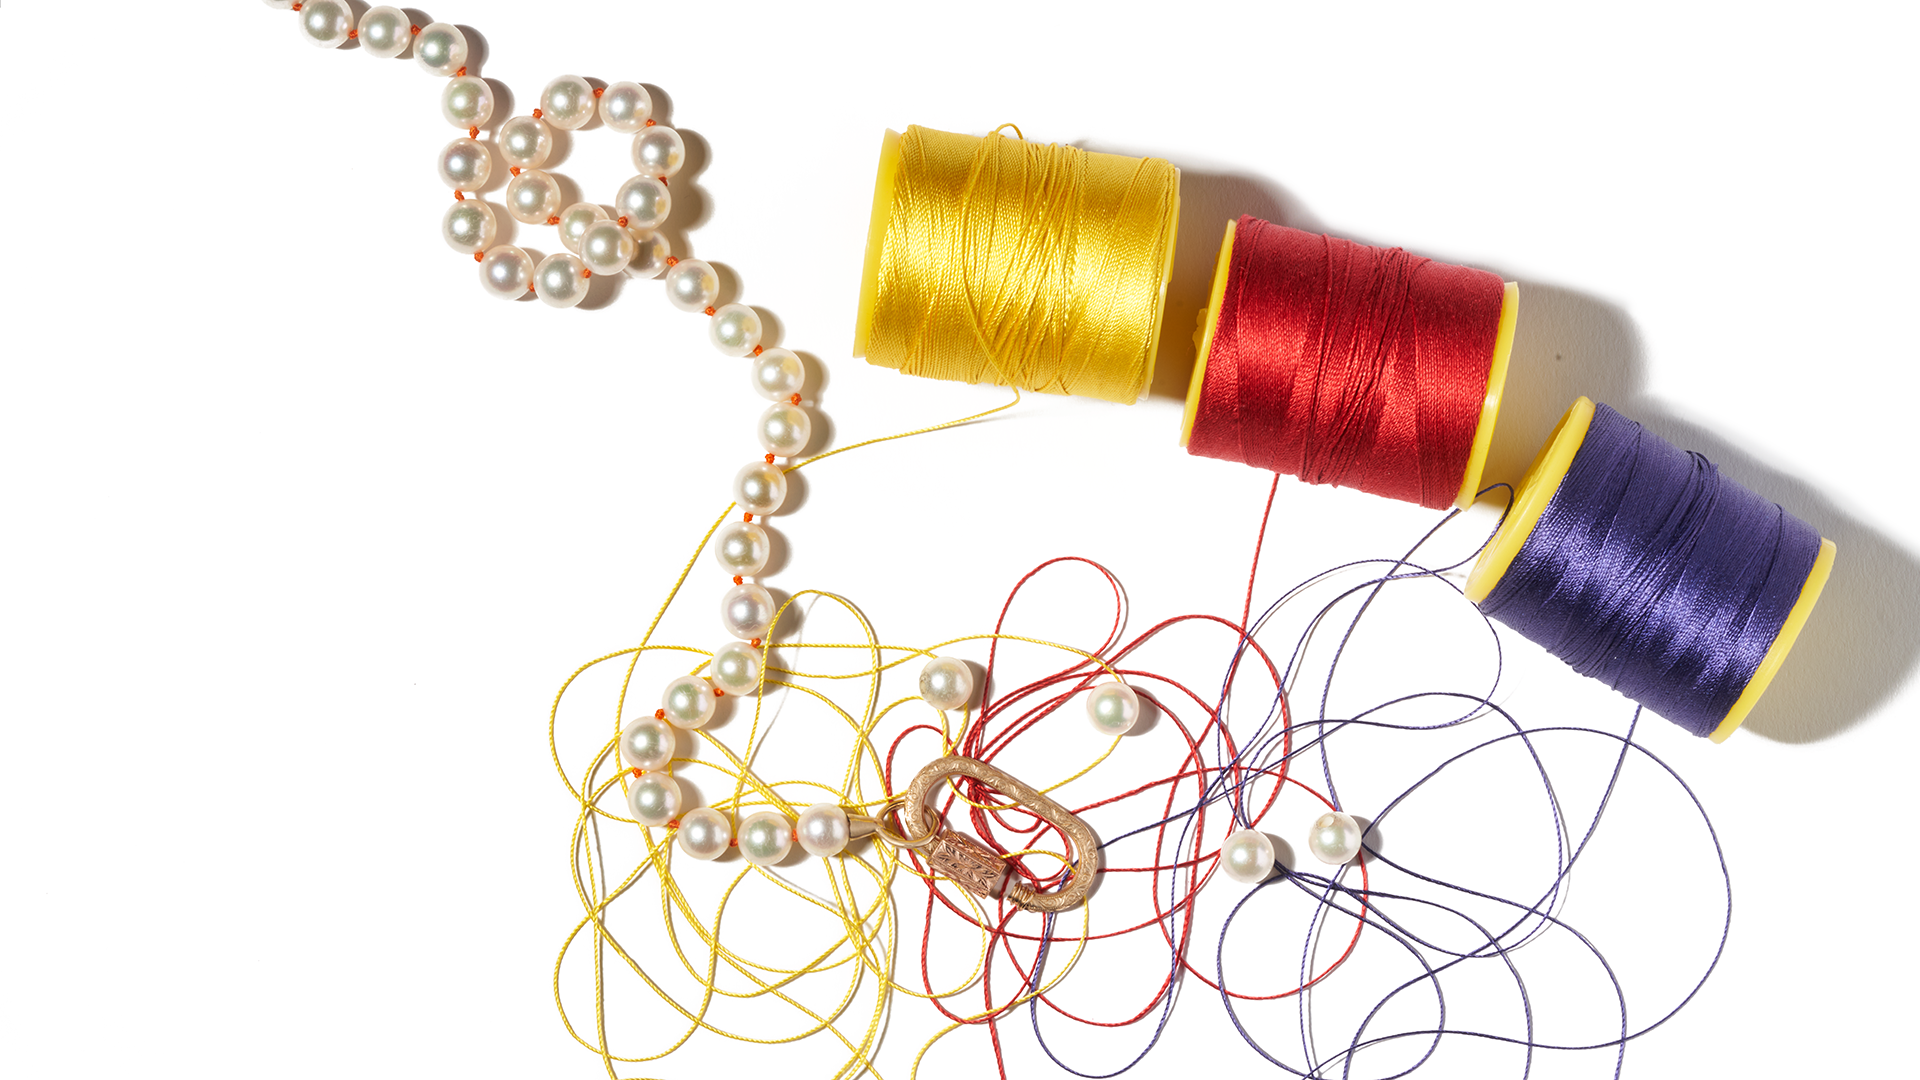 Three spools of thread alongside custom made pearl jewelry strand